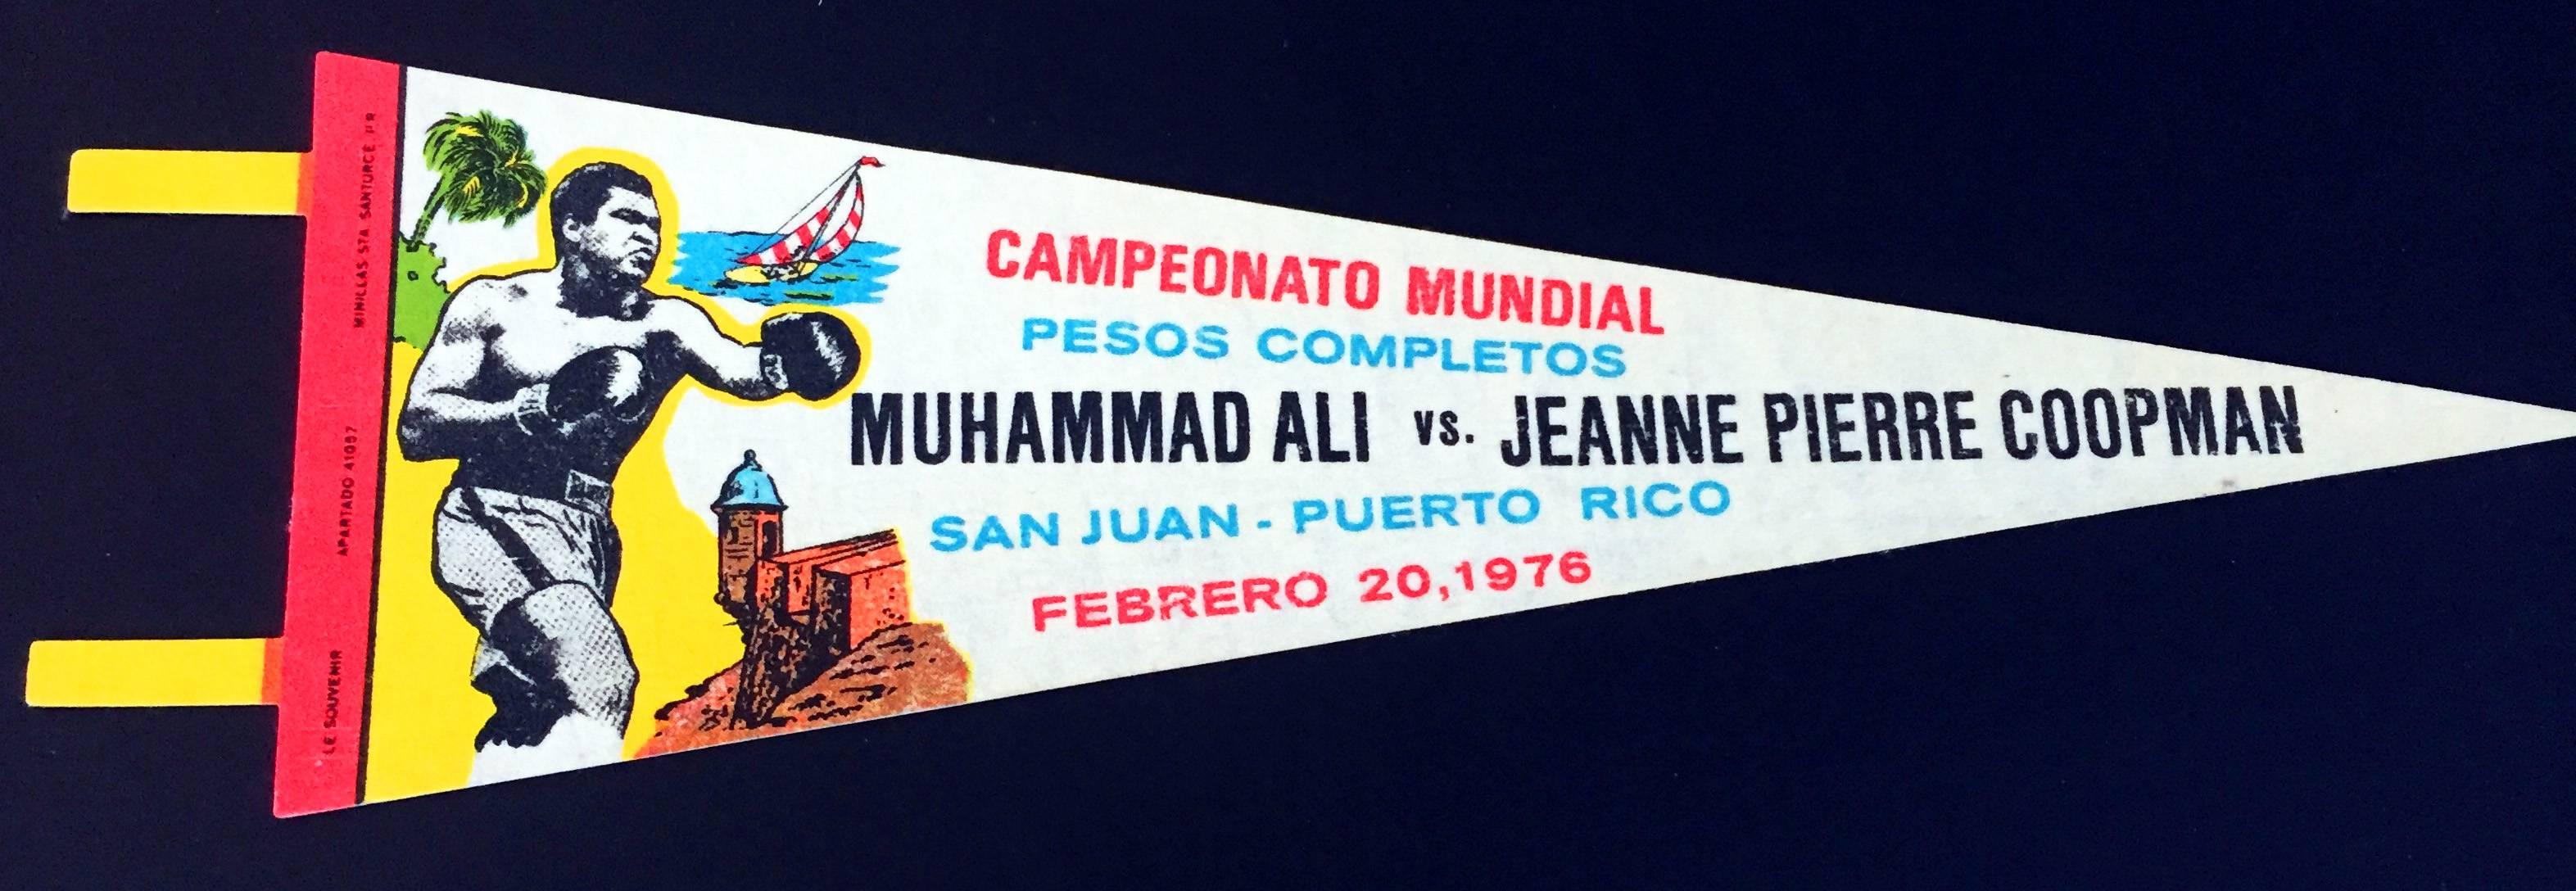 Muhammad Ali
Vintage original, like new, souvenir pennant: Muhammad Ali versus Jeanne Pierre Coopman, February 20, 1976 at the Roberto Clemente Coliseum in San Juan, Puerto Rico. 

Bold crisp colors; excellent print quality. No tack holes. 
27.5